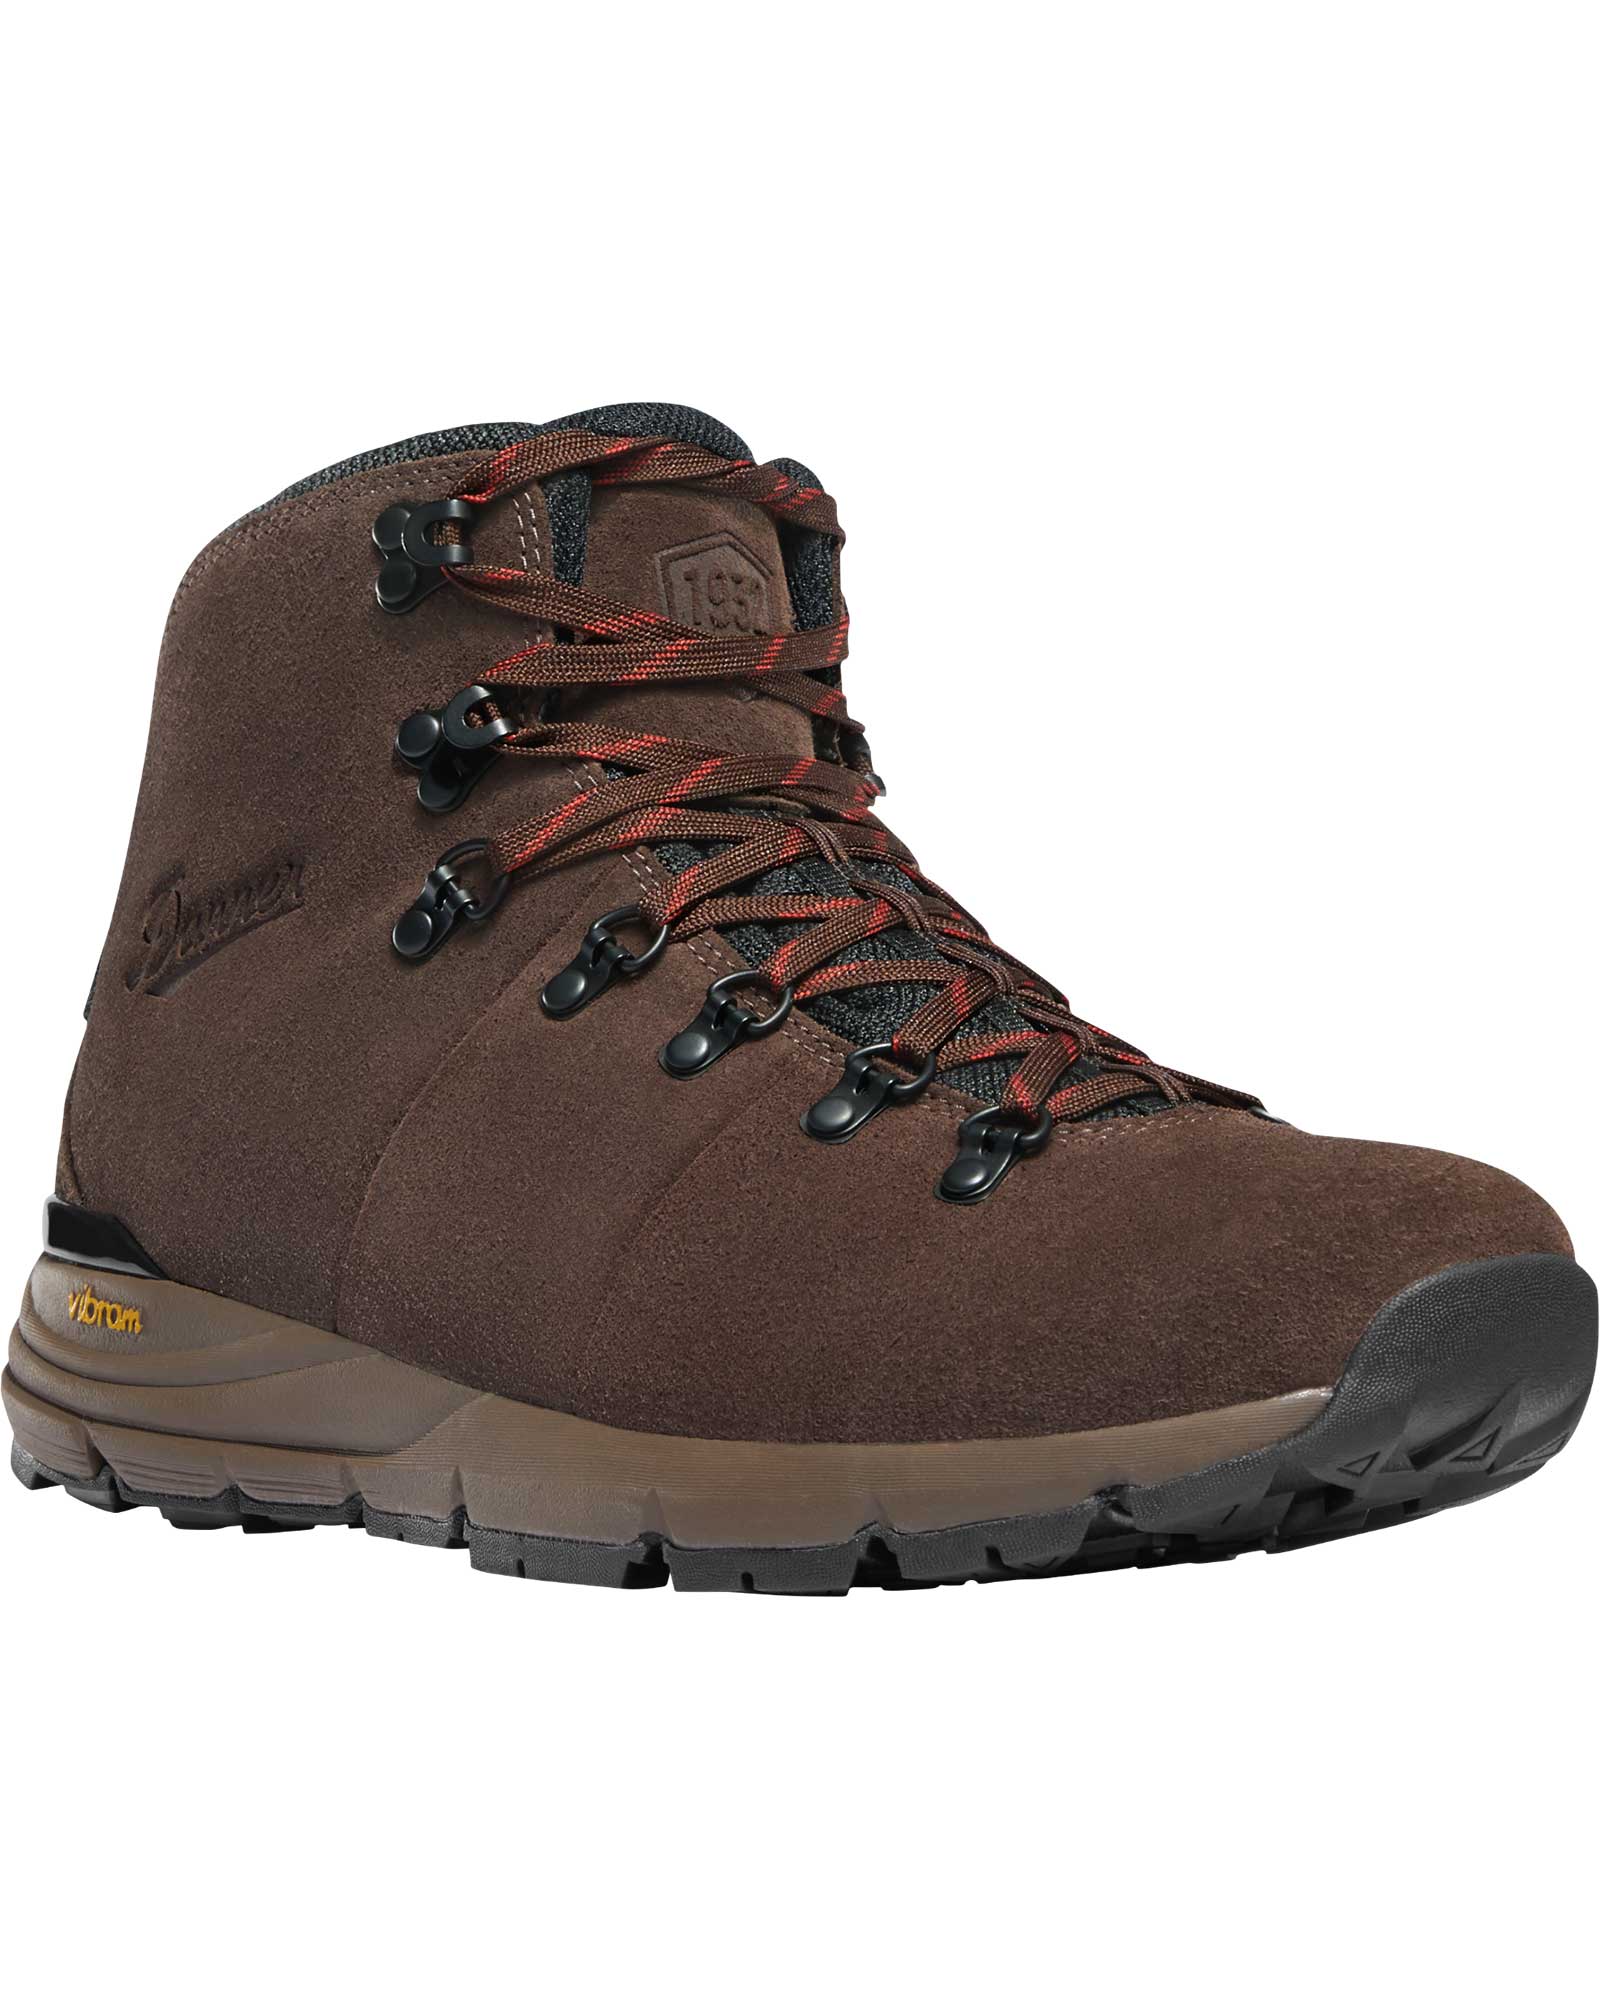 Danner Men’s Mountain 600 Boots - Java/Bossa Nova UK 9.5